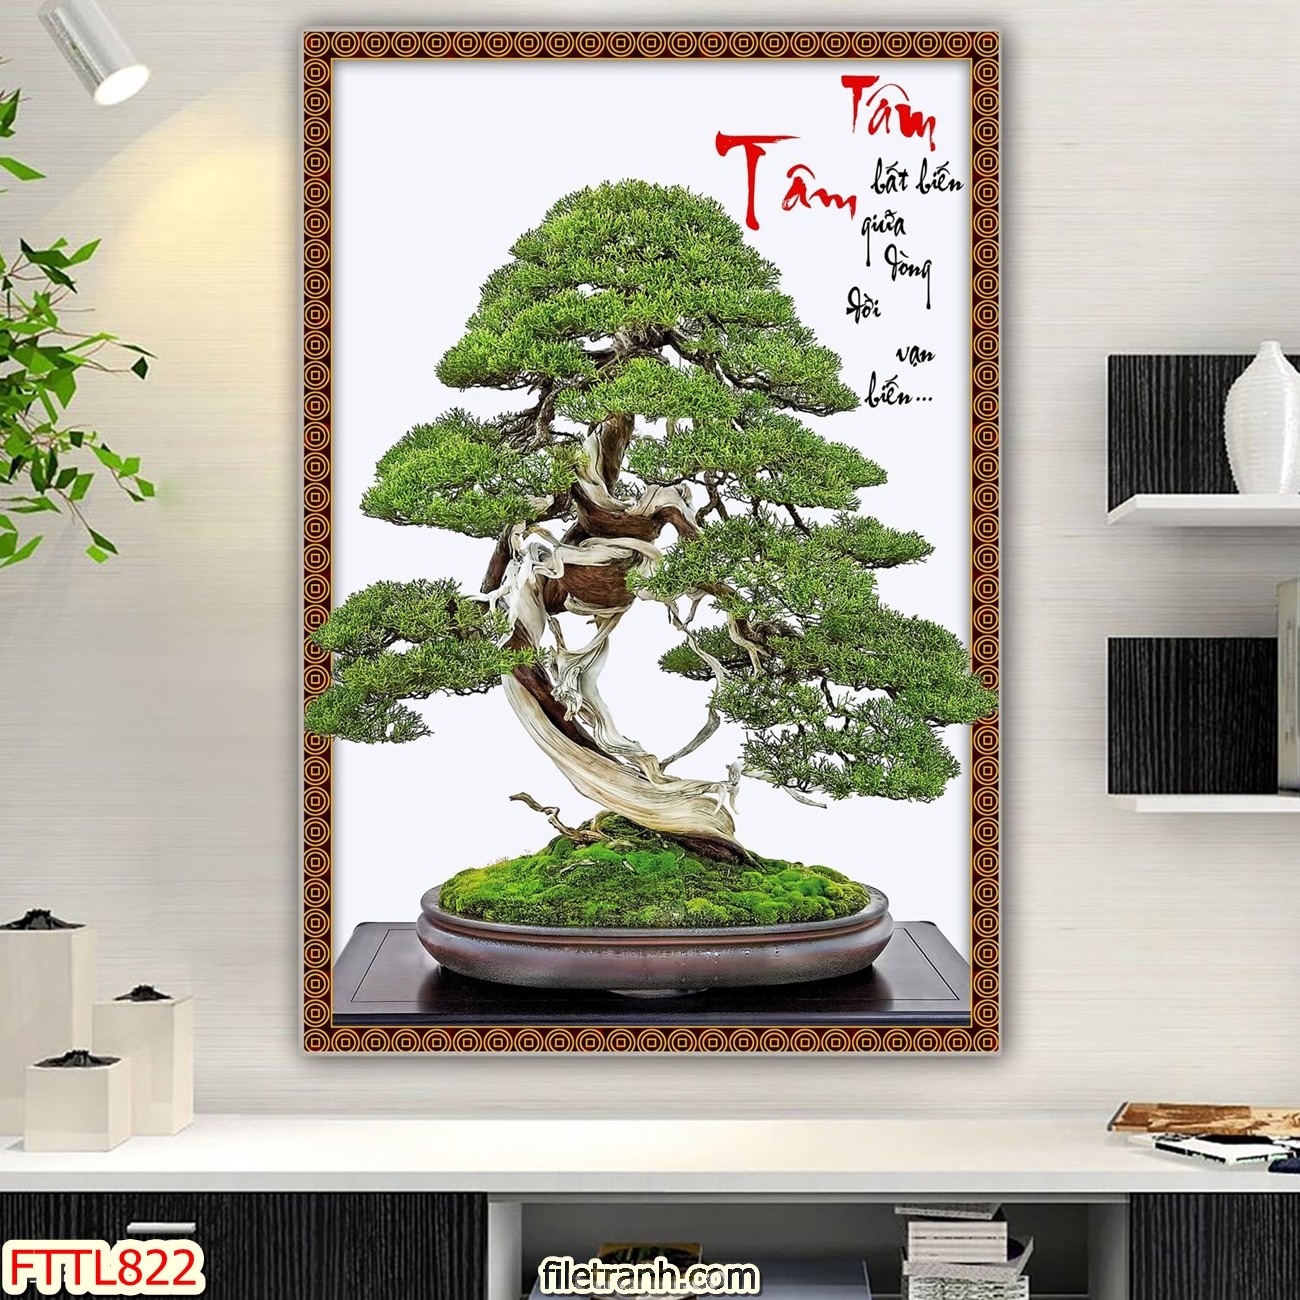 https://filetranh.com/file-tranh-chau-mai-bonsai/file-tranh-chau-mai-bonsai-fttl822.html